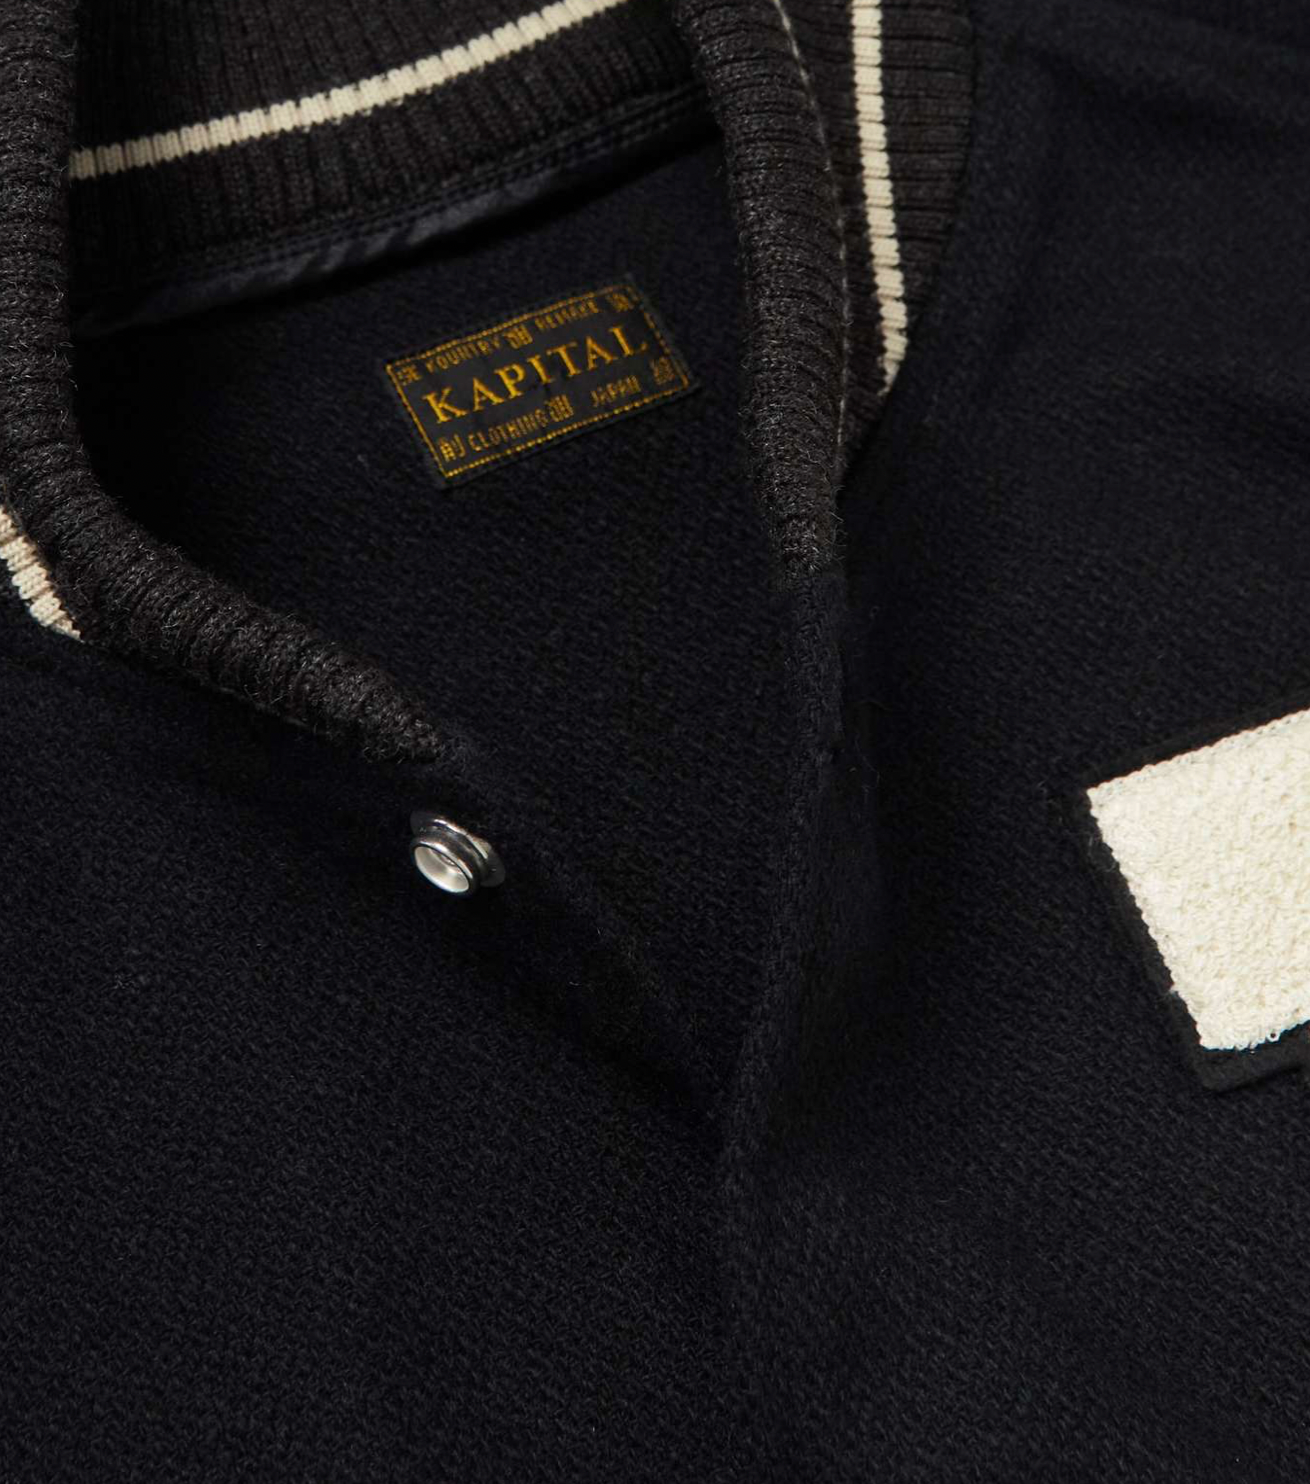 Capital P Leather Wool Black Varsity Jacket - Just American Jackets